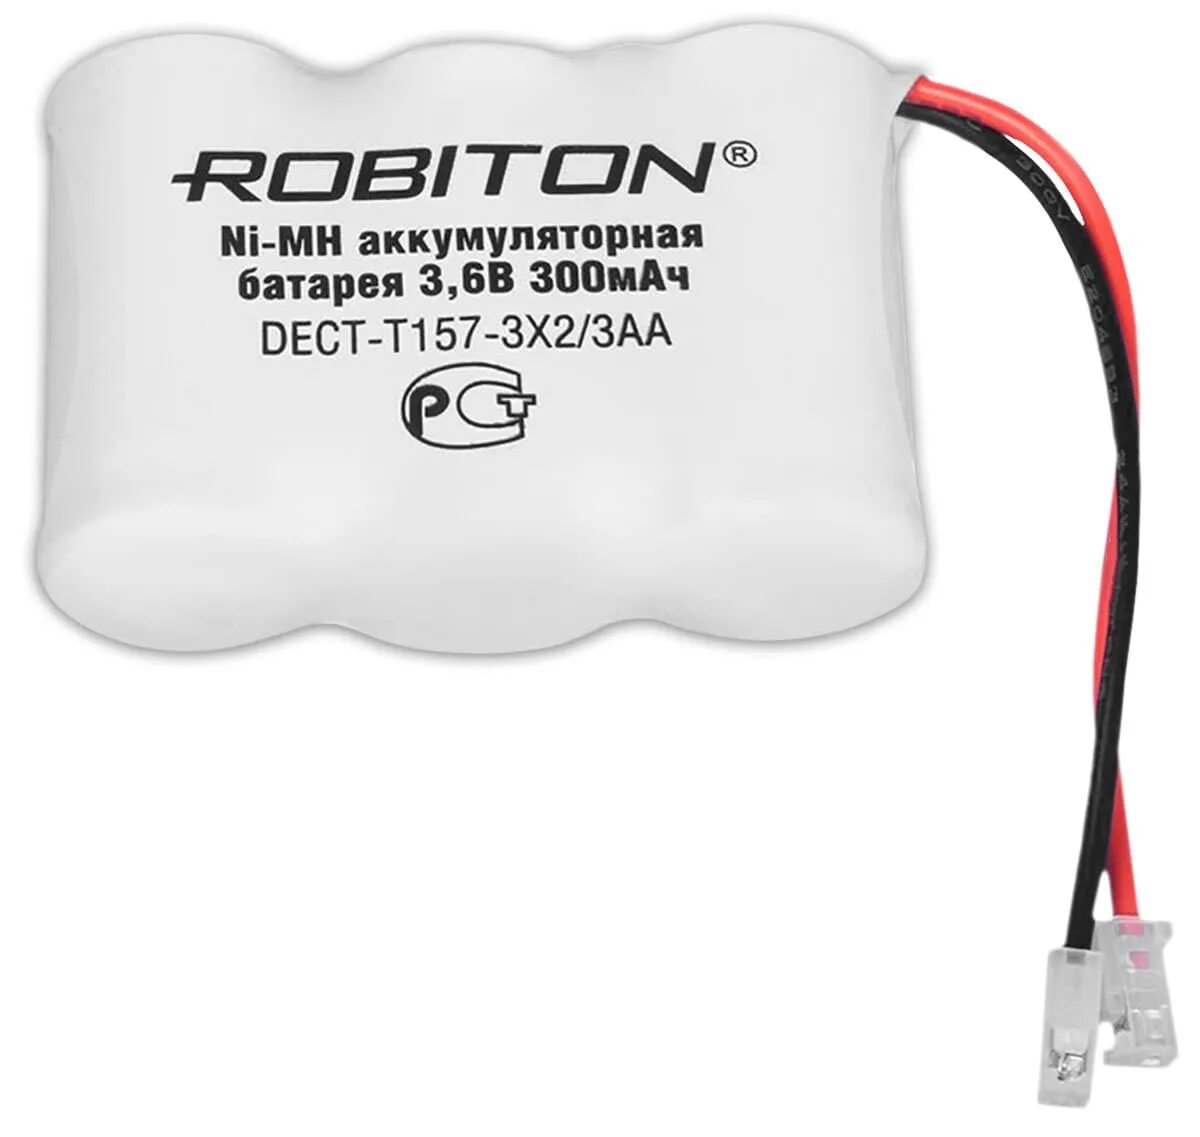 Купить аккумулятор 3.6. Аккумулятор Robiton DECT-t157. Аккумулятор Robiton DECT-t279. Аккумулятор для радиотелефона t157. Robiton аккумуляторы 3.6v.